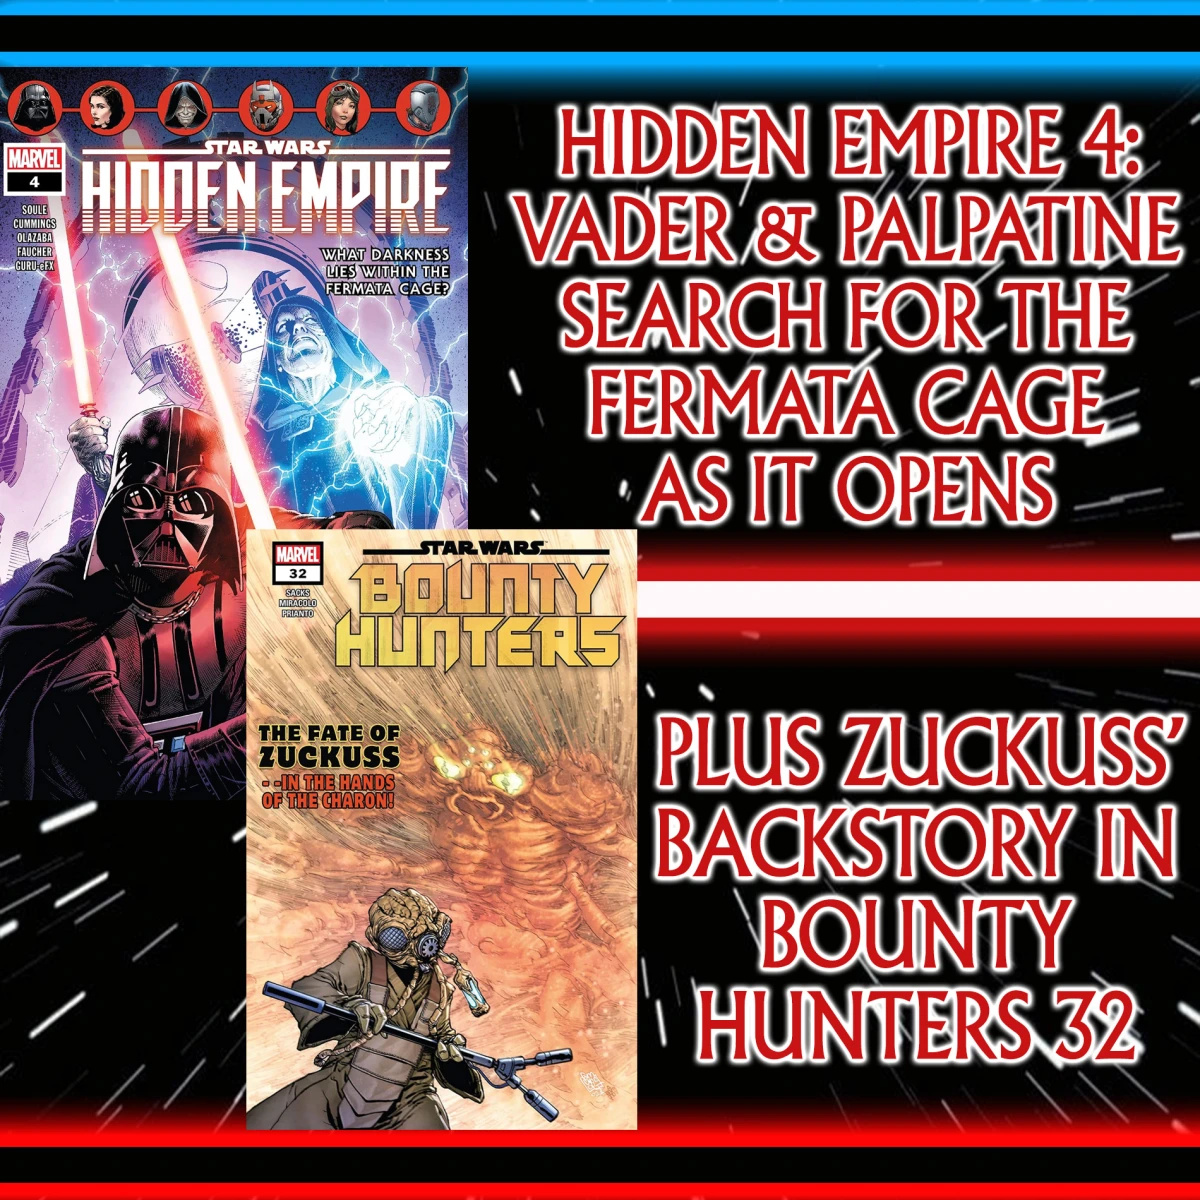 Star Wars: Comics In Canon – Hidden Empire 4 & Zuckuss’ Backstory: The Fermata Cage Opens & The Edgehawk Among Asteroids (Hidden Empire 4 & Bounty Hunters 32) – Ep 127